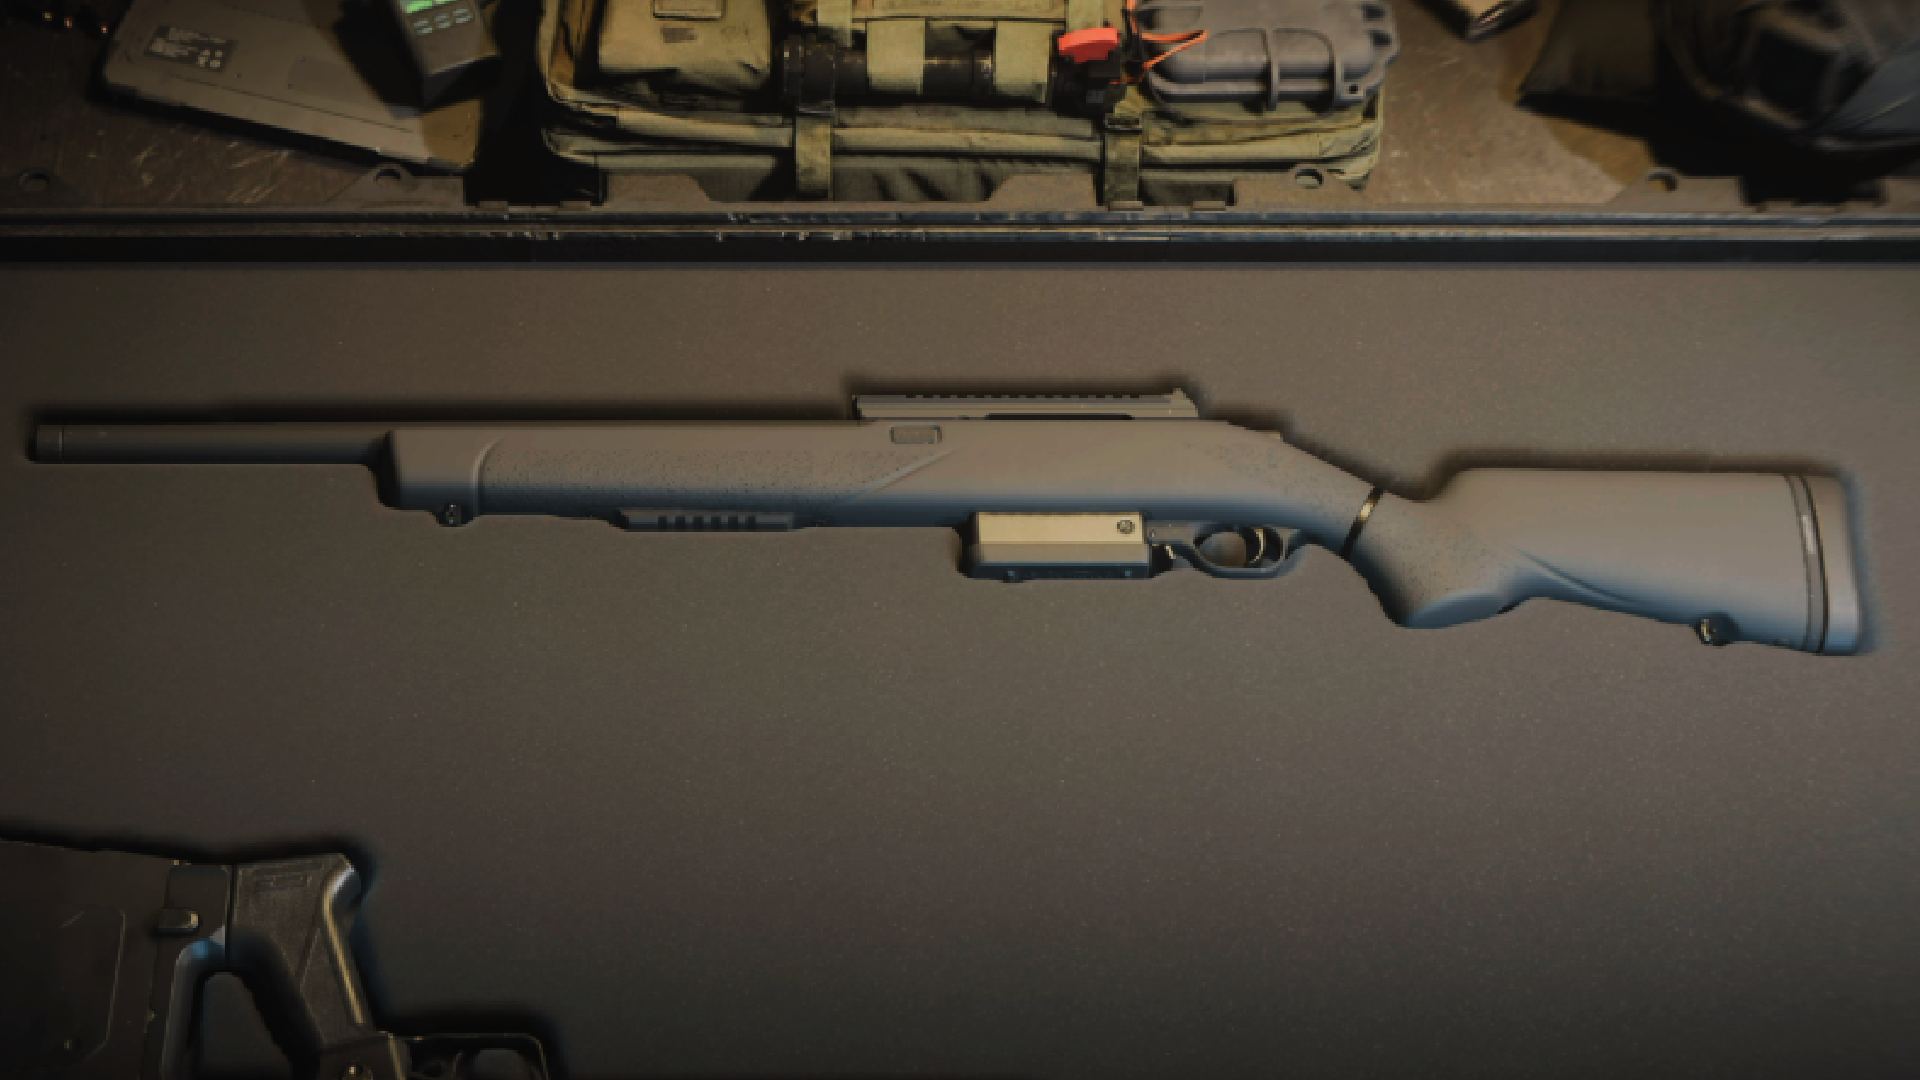 Modern Warfare 2 Best Marksman Rifle: The SP-R 208 can be seen